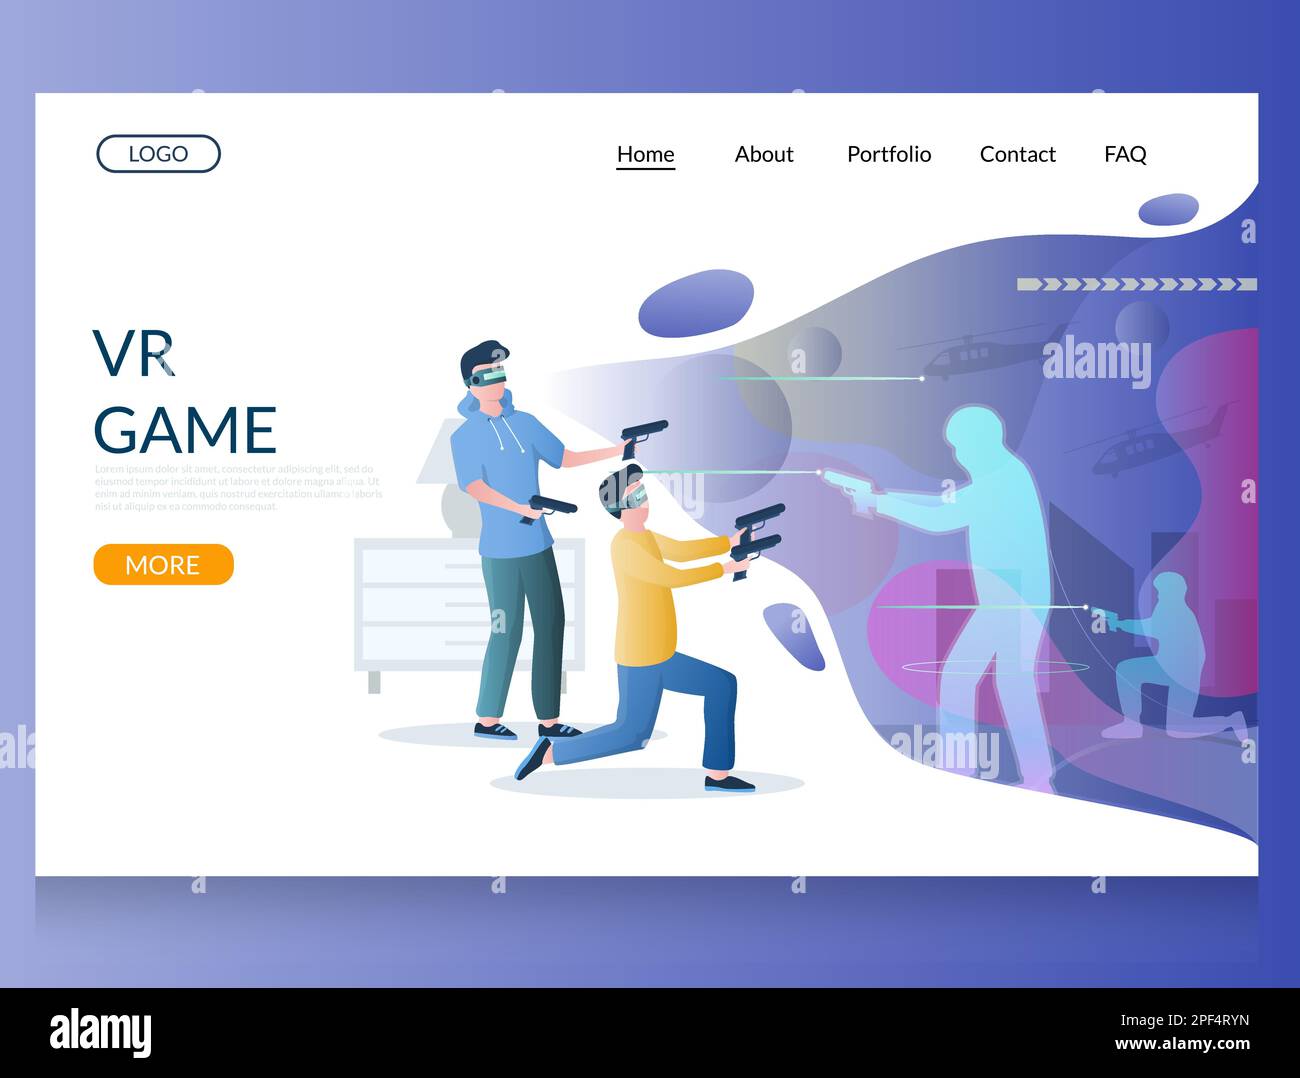 VR game vector website landing page design template Stock Vector